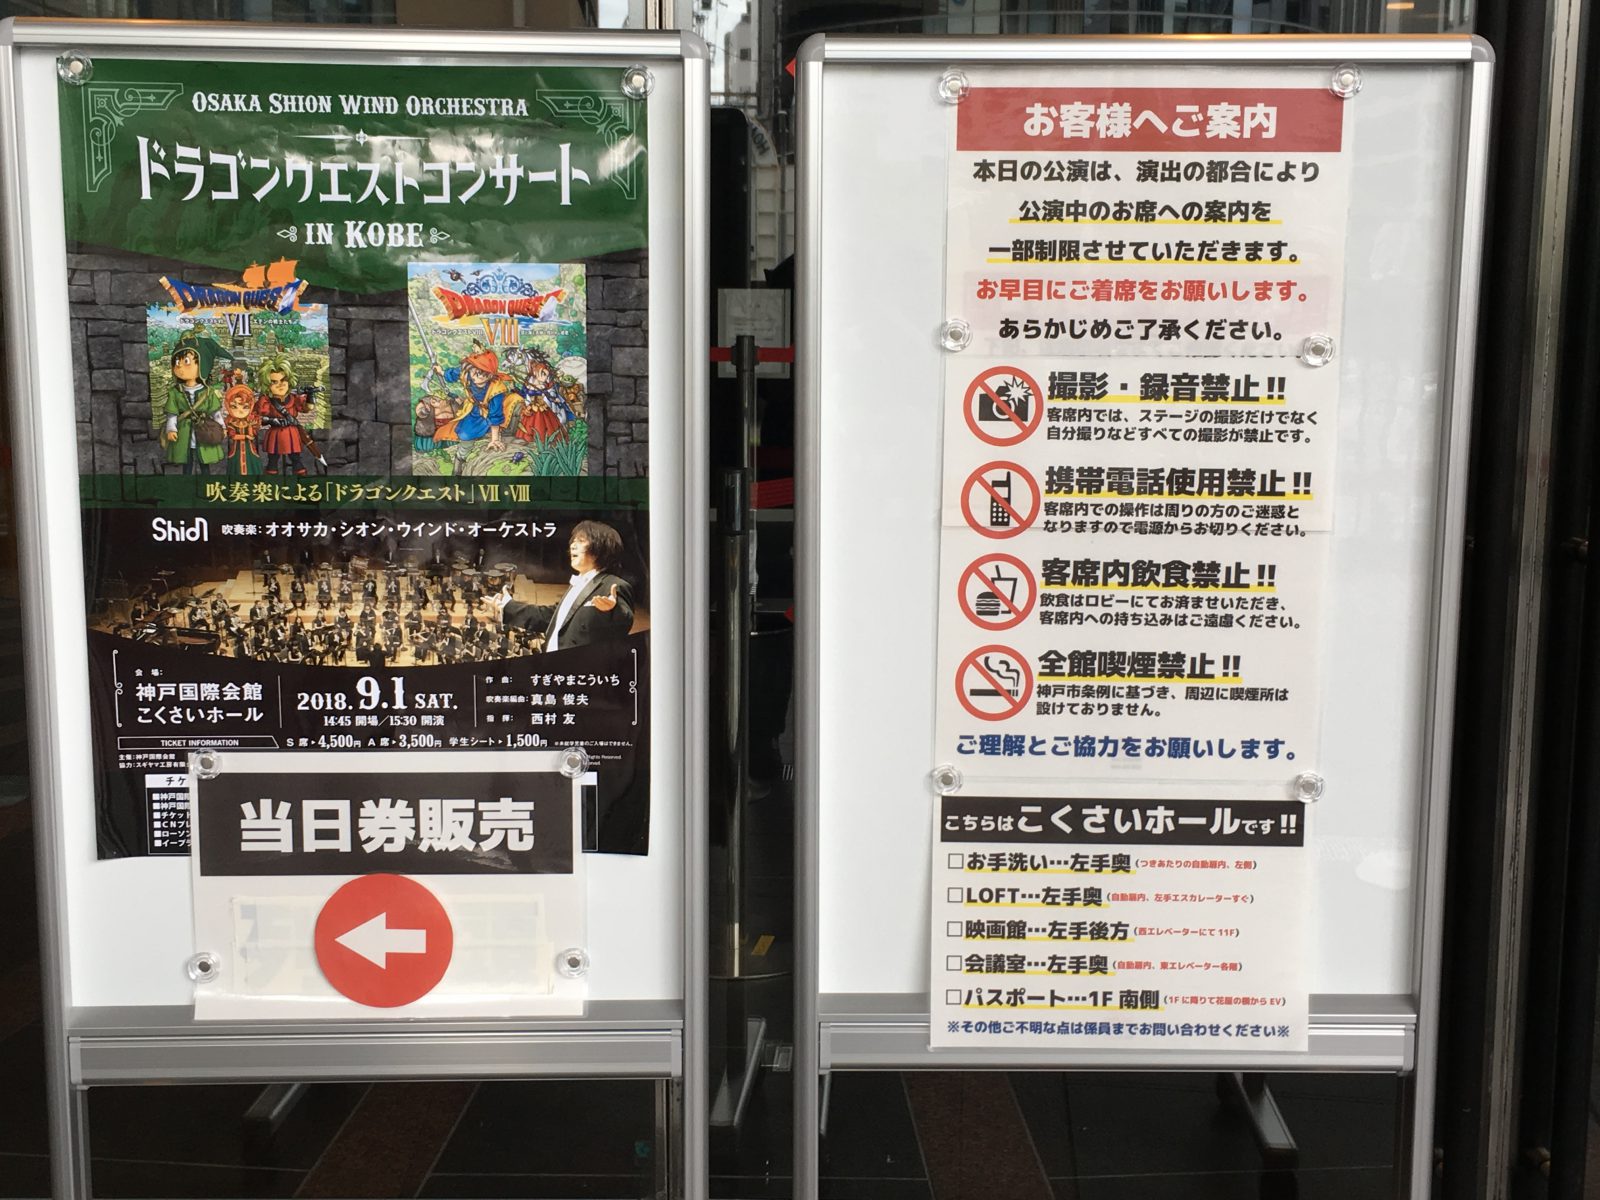 Osaka Shion Wind Orchestra ドラゴンクエストコンサート ドラクエ7 8 In 神戸 参加レポート Mnaの世界